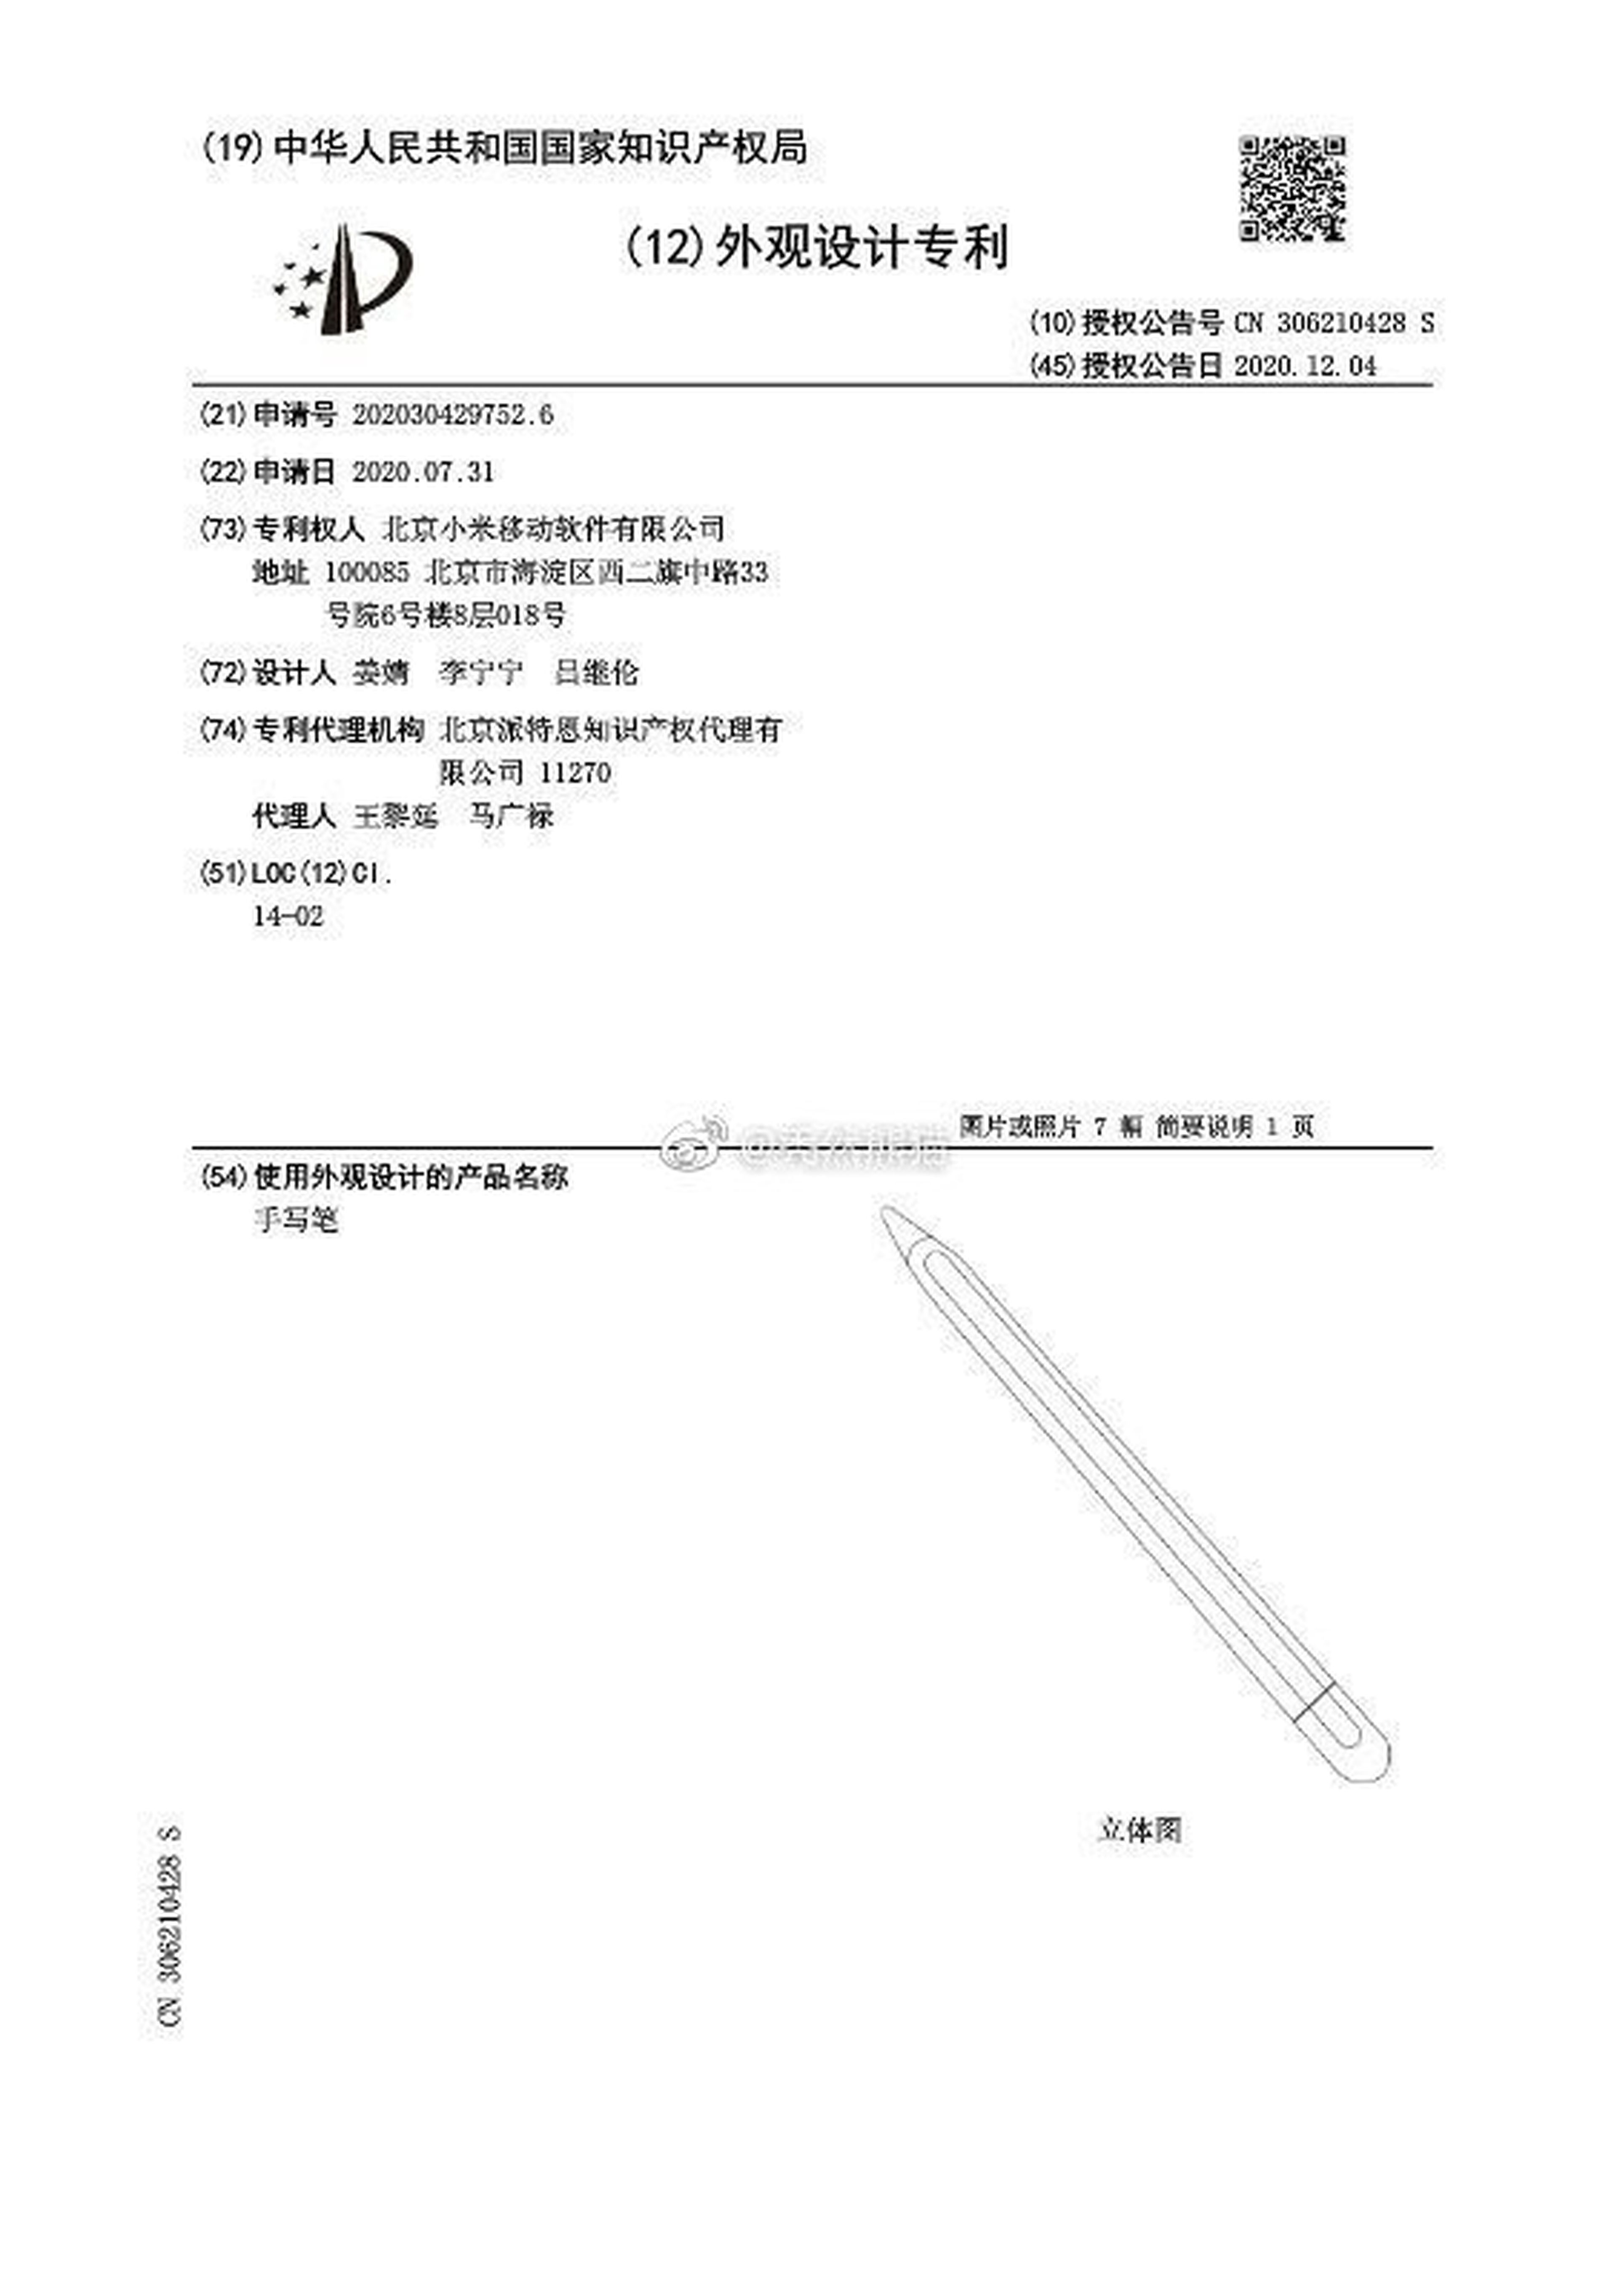 Patente My Stylus Xiaomi